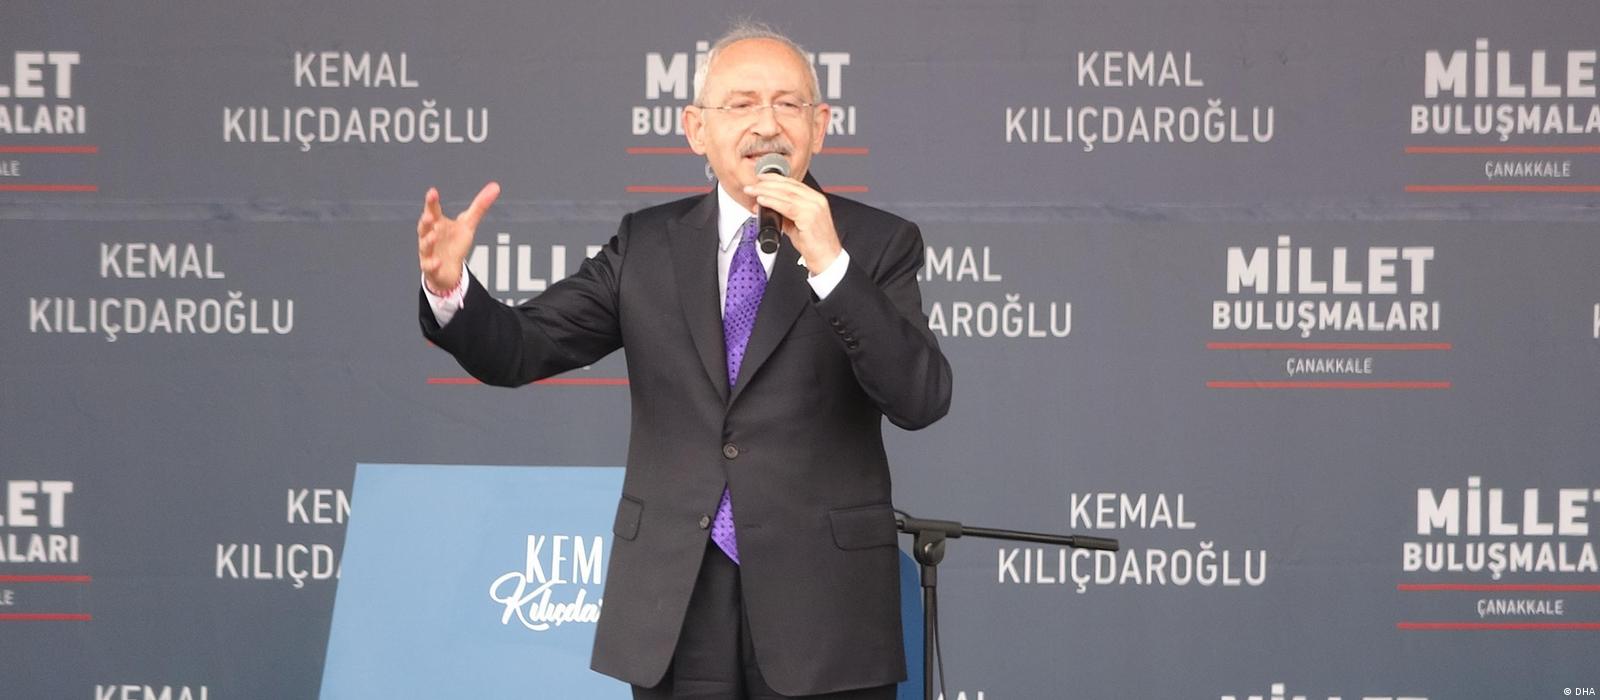 FAZ: Ανάλυση των τουρκικών εκλογών! “Ένα είδος αντι-Ερντογάν ο Κιλτσντάρογλου”